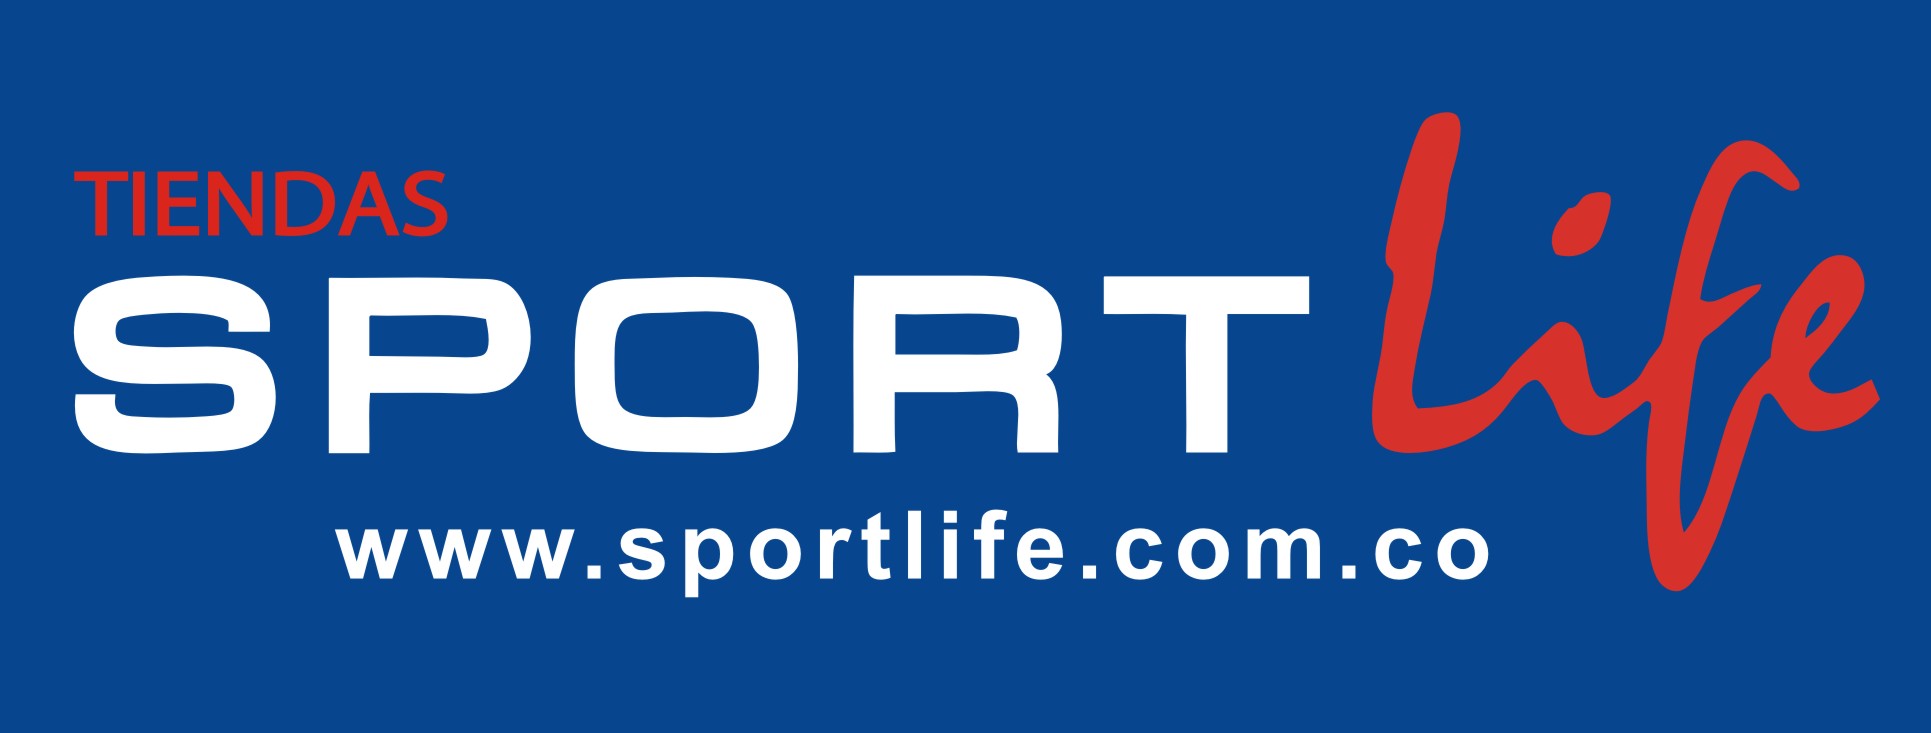 Logo Sportlife